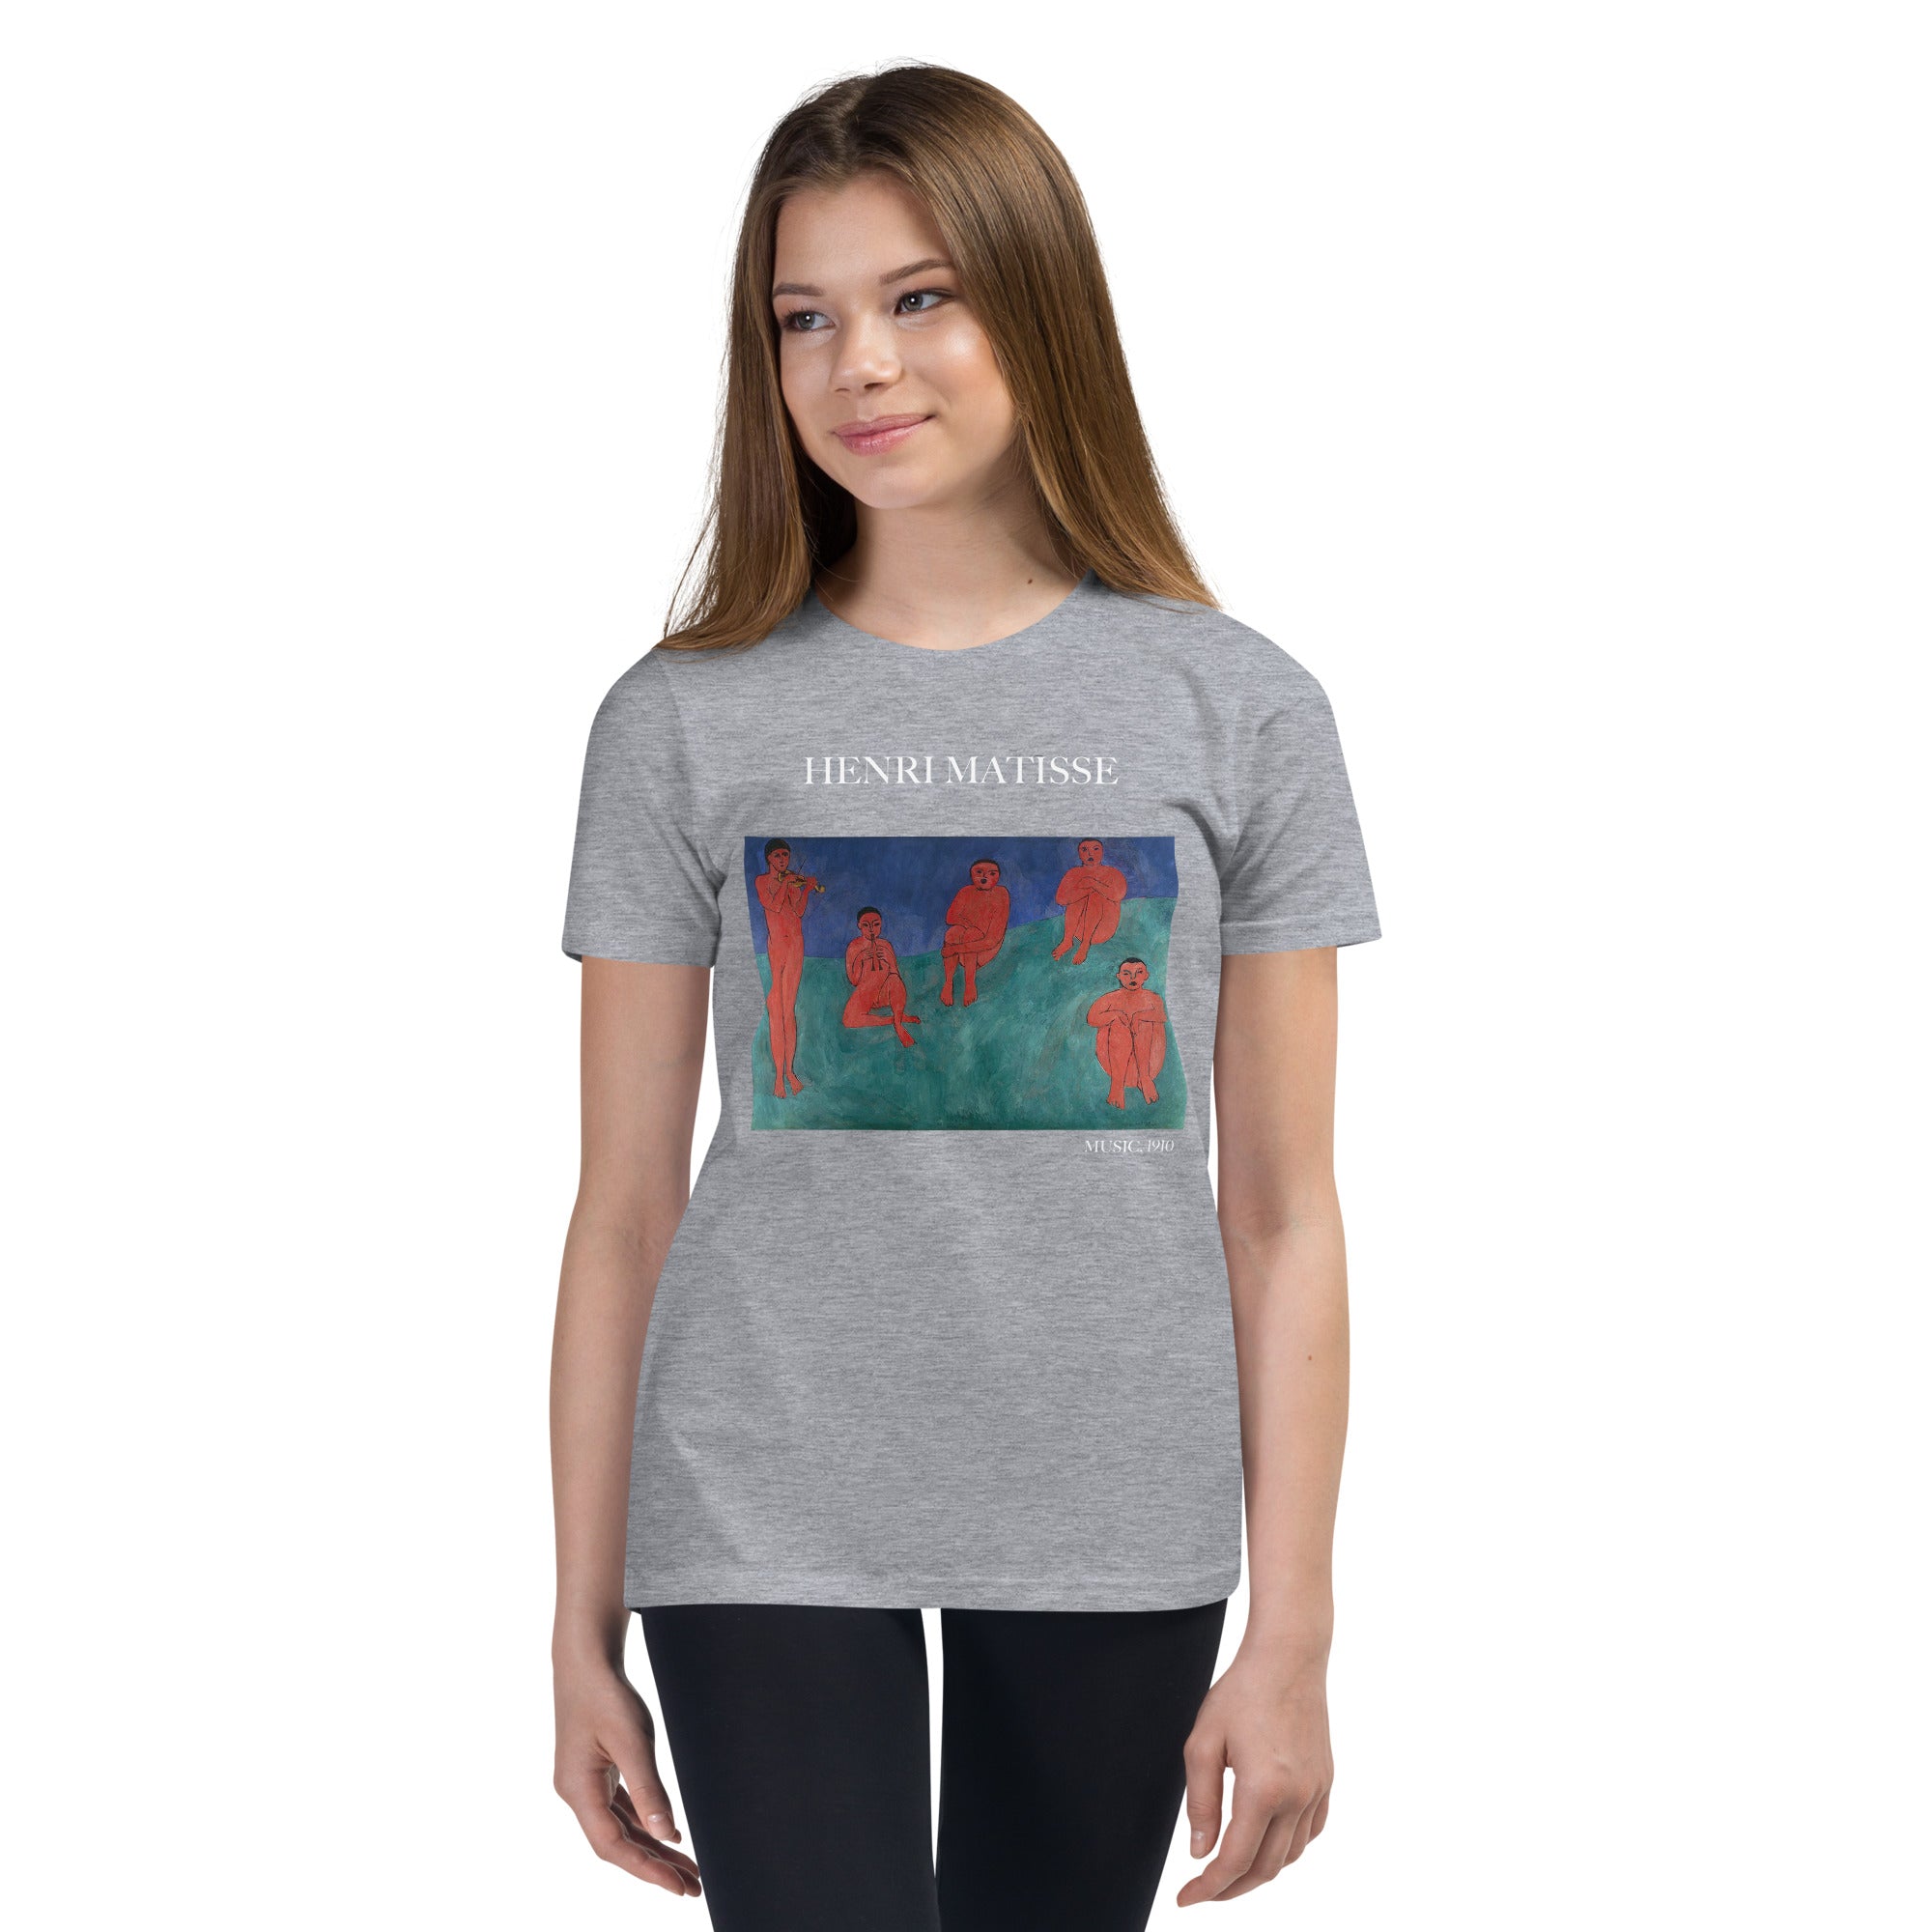 Henri Matisse 'Music' Famous Painting Short Sleeve T-Shirt | Premium Youth Art Tee